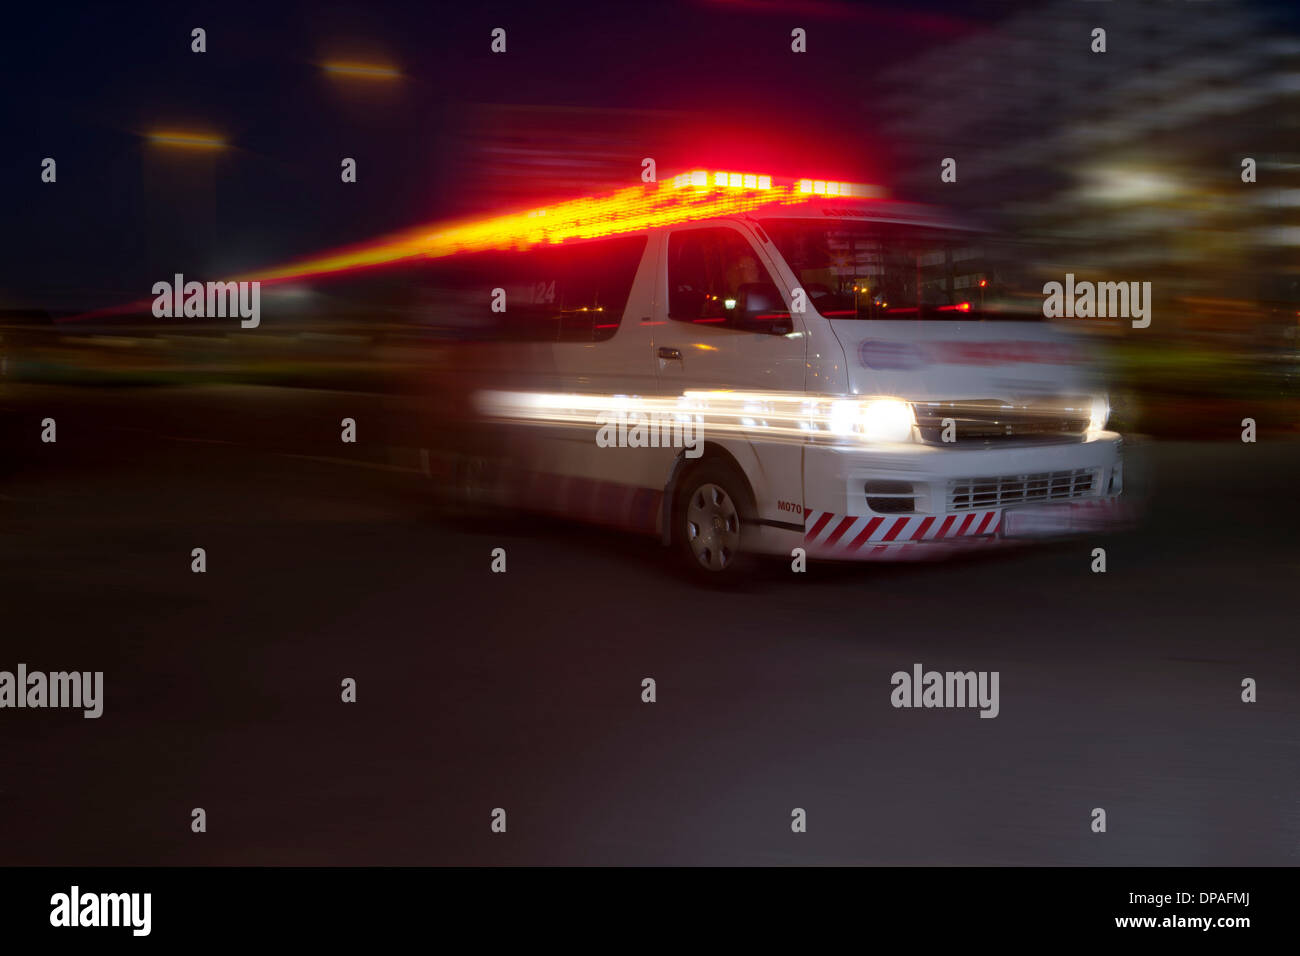 Emergency ambulance speeding through city at night Stock Photo